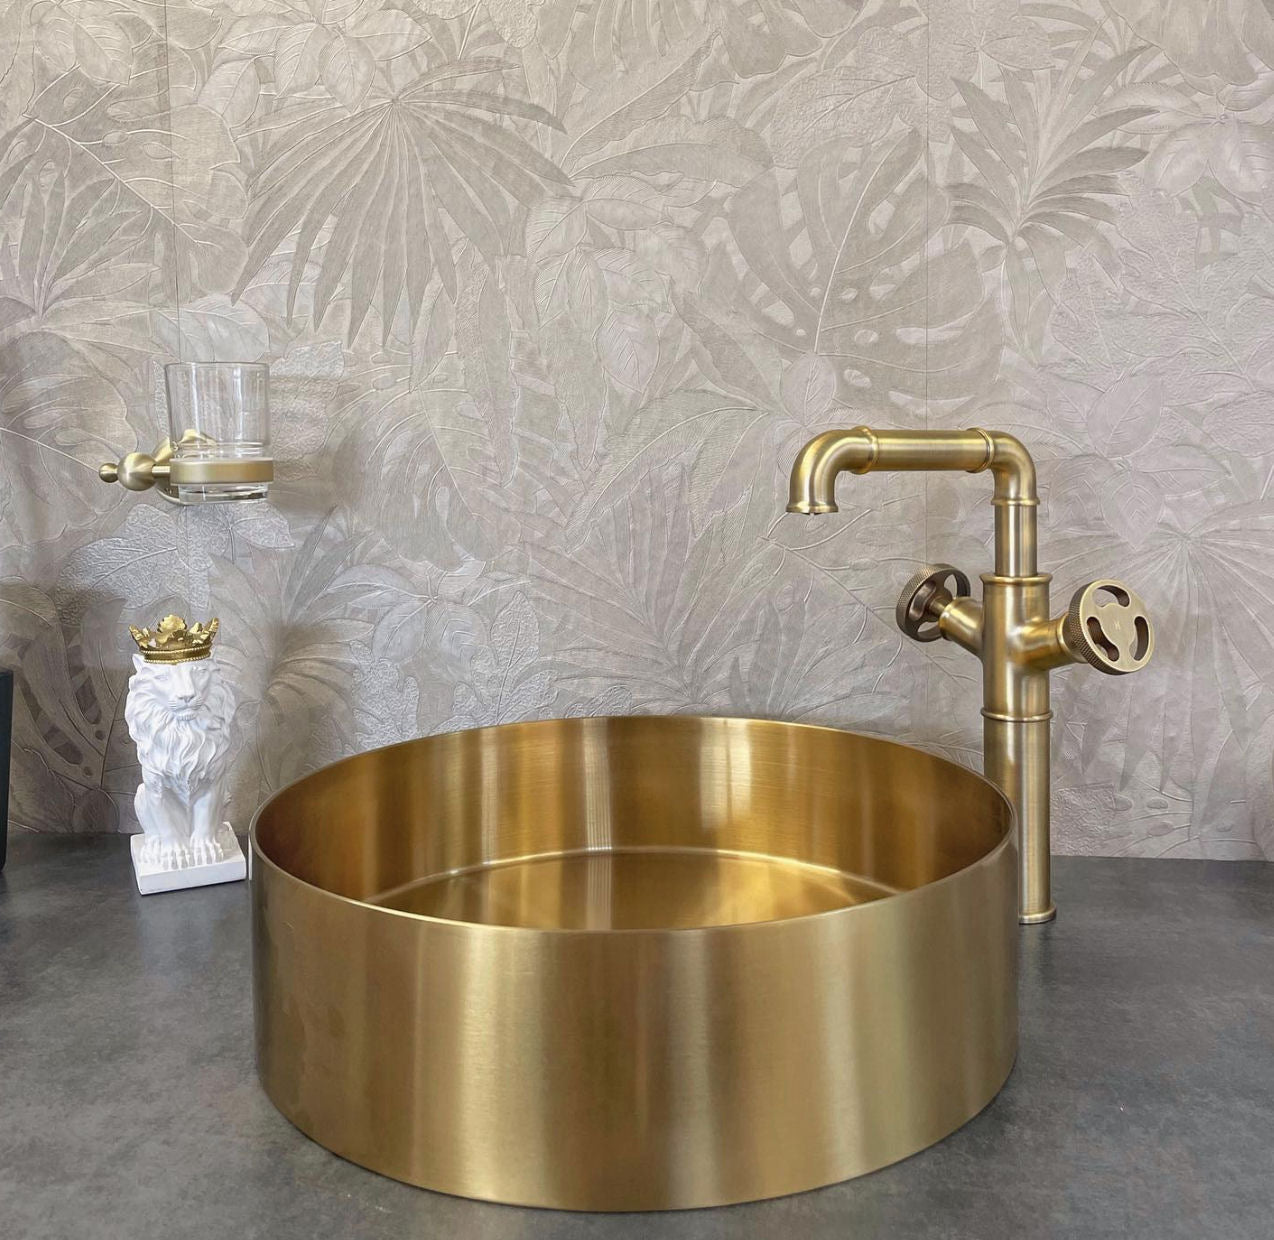 Industrial Design Two Handles Bathroom Vessel Sink Faucet in Antique Brass - |VESIMI Design|